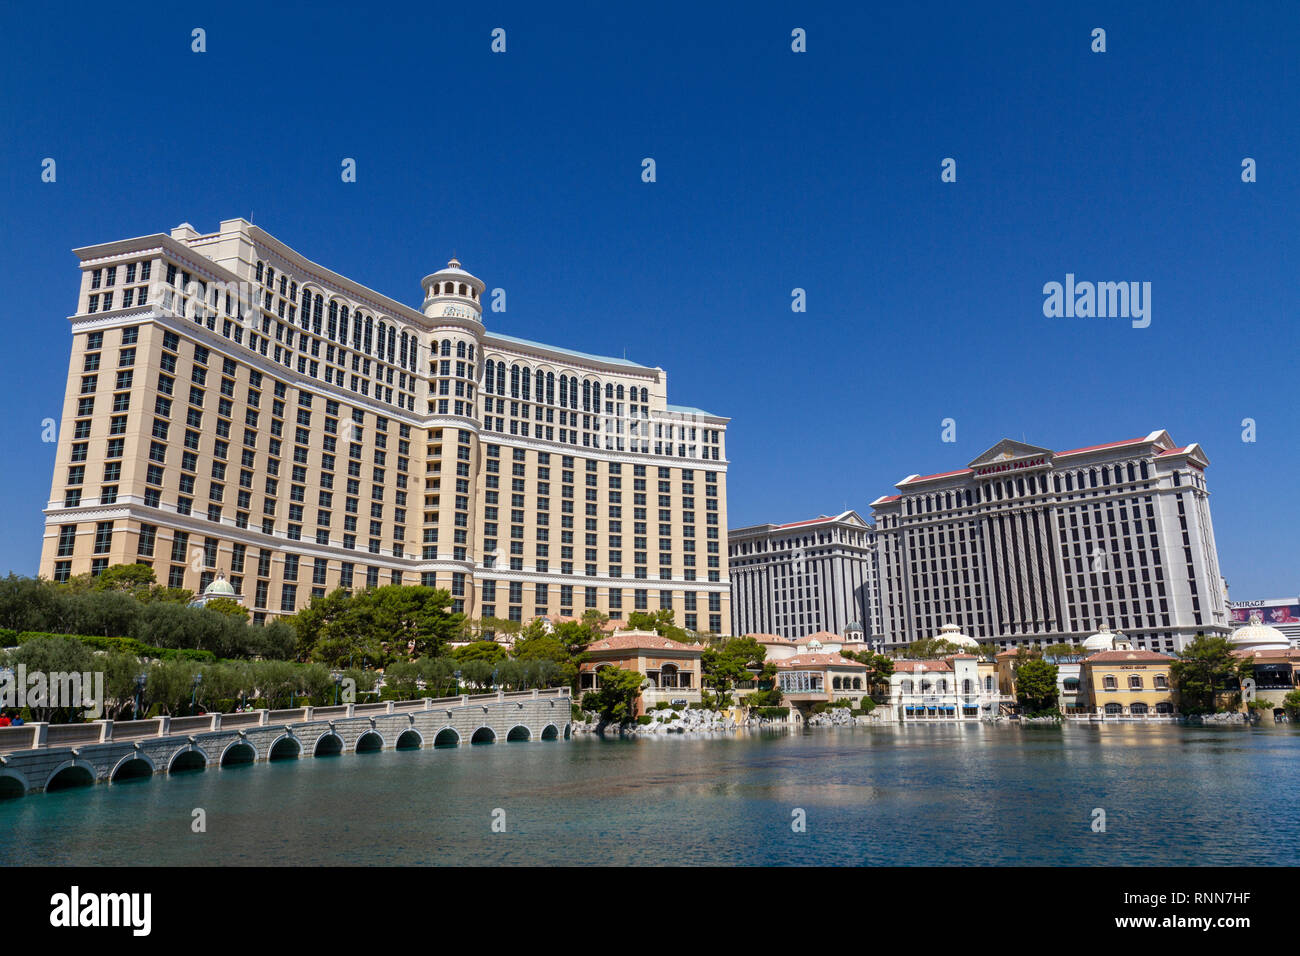 Das Bellagio Hotel und Casino Caesars Palace Las Vegas Hotel & Casino, Las Vegas (Las Vegas), Nevada, United States. Stockfoto